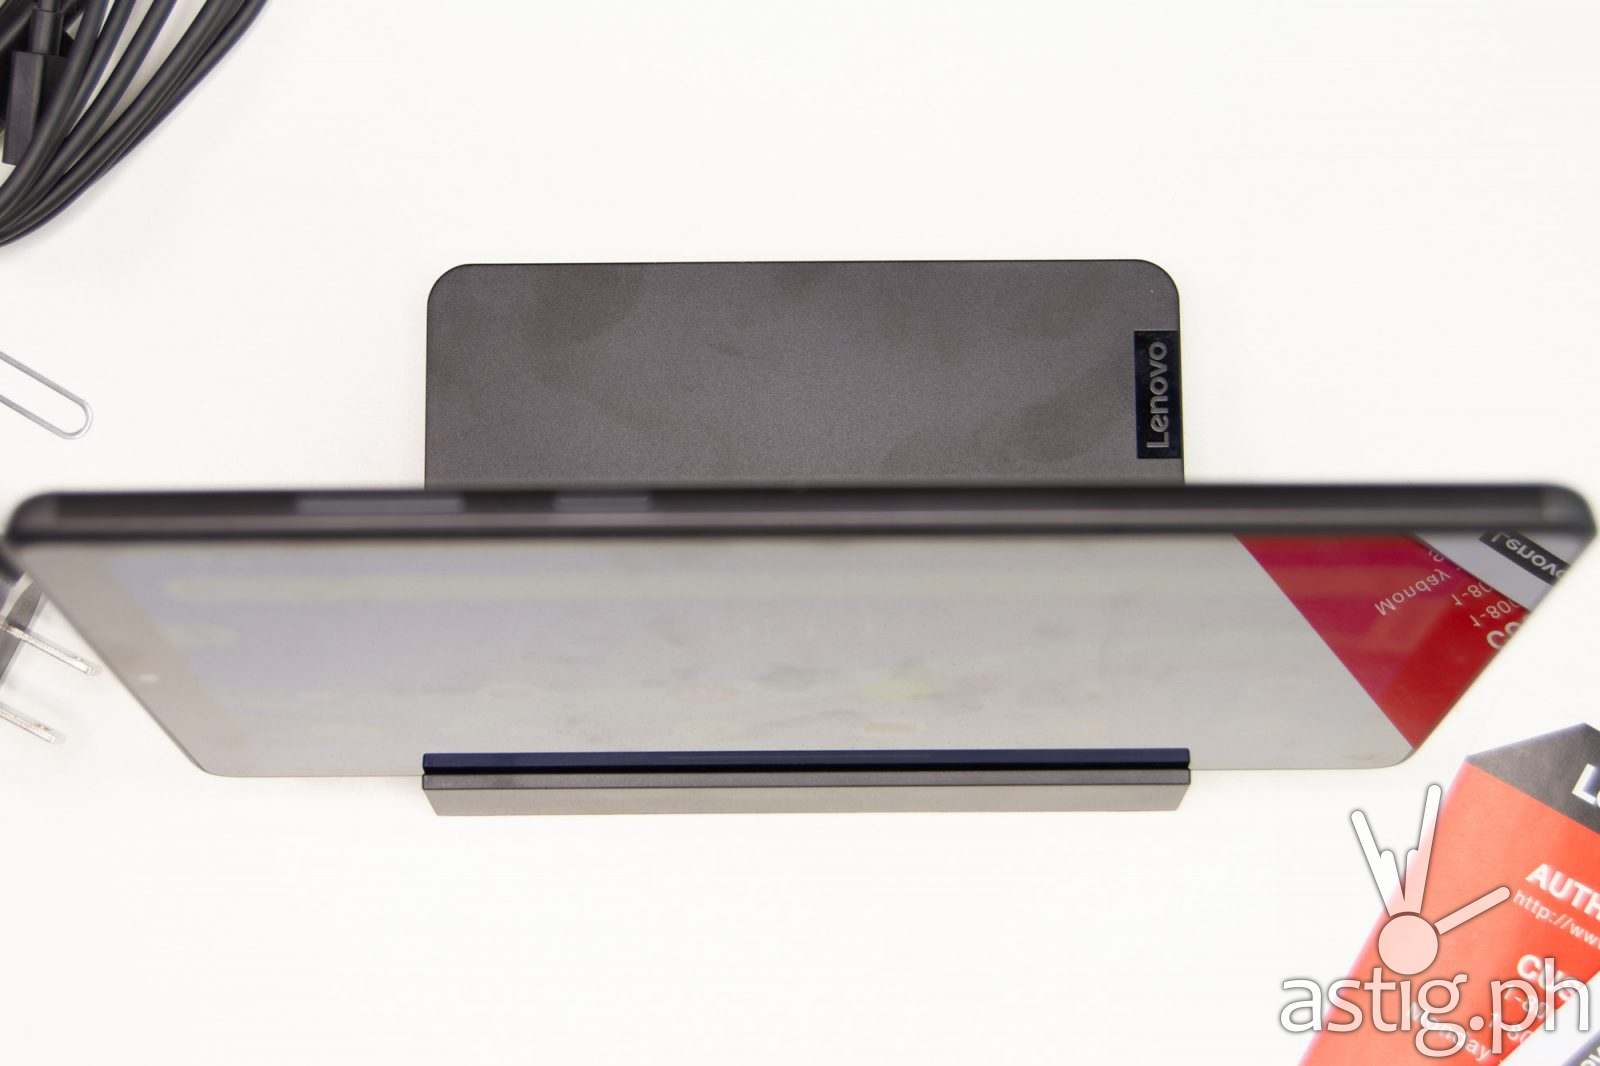 Docked top - Lenovo Smart Tab M8 (Philippines)